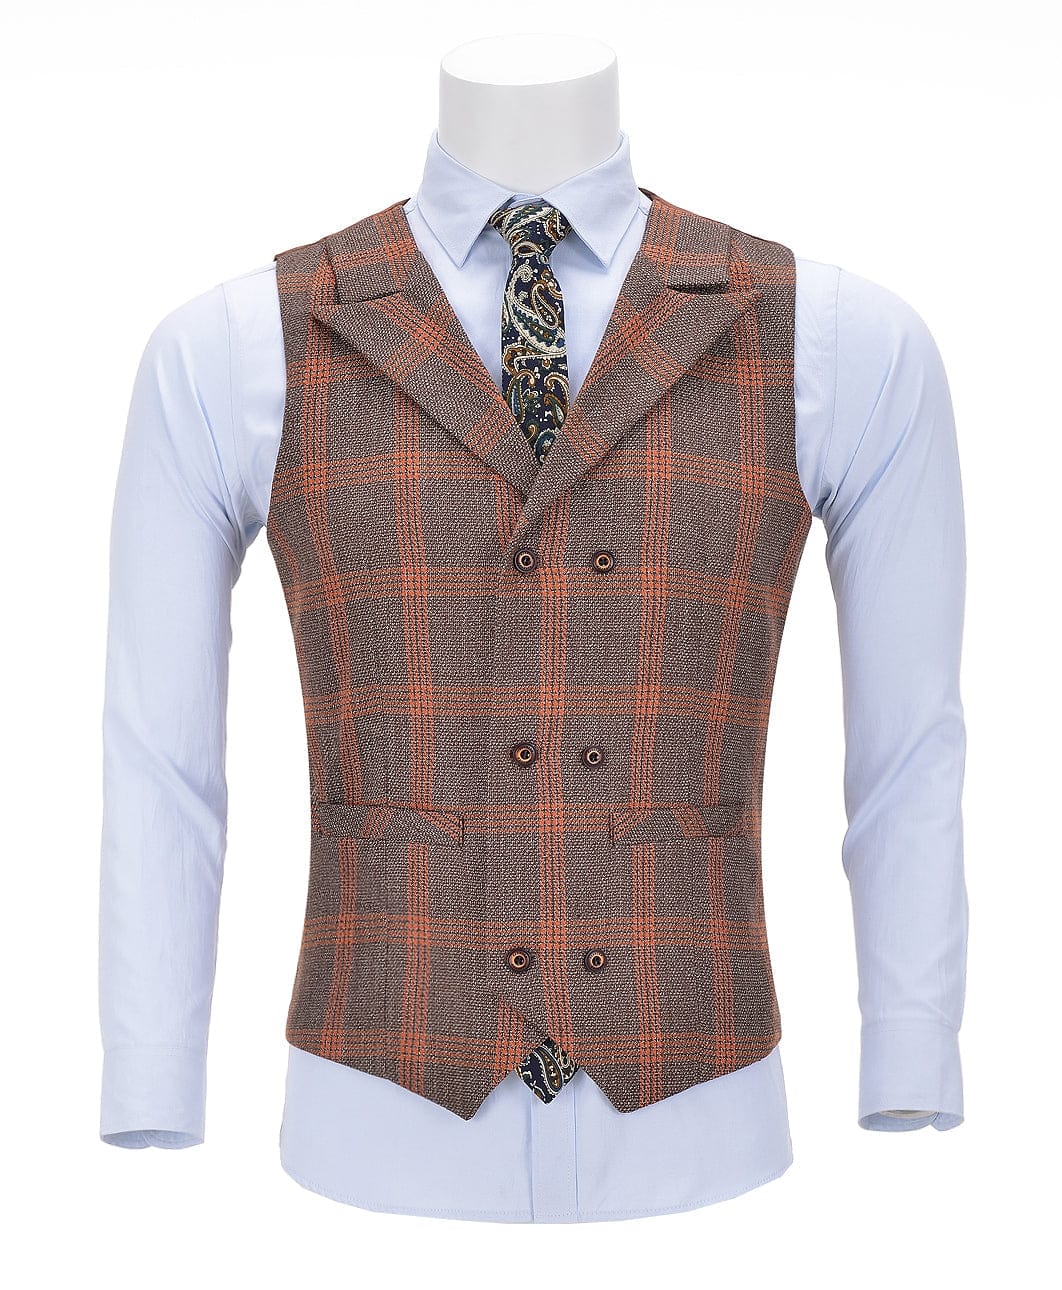 aesido Orange Plaid Peak Lapel Waistcoat Casual Slim Fit Suit Vest